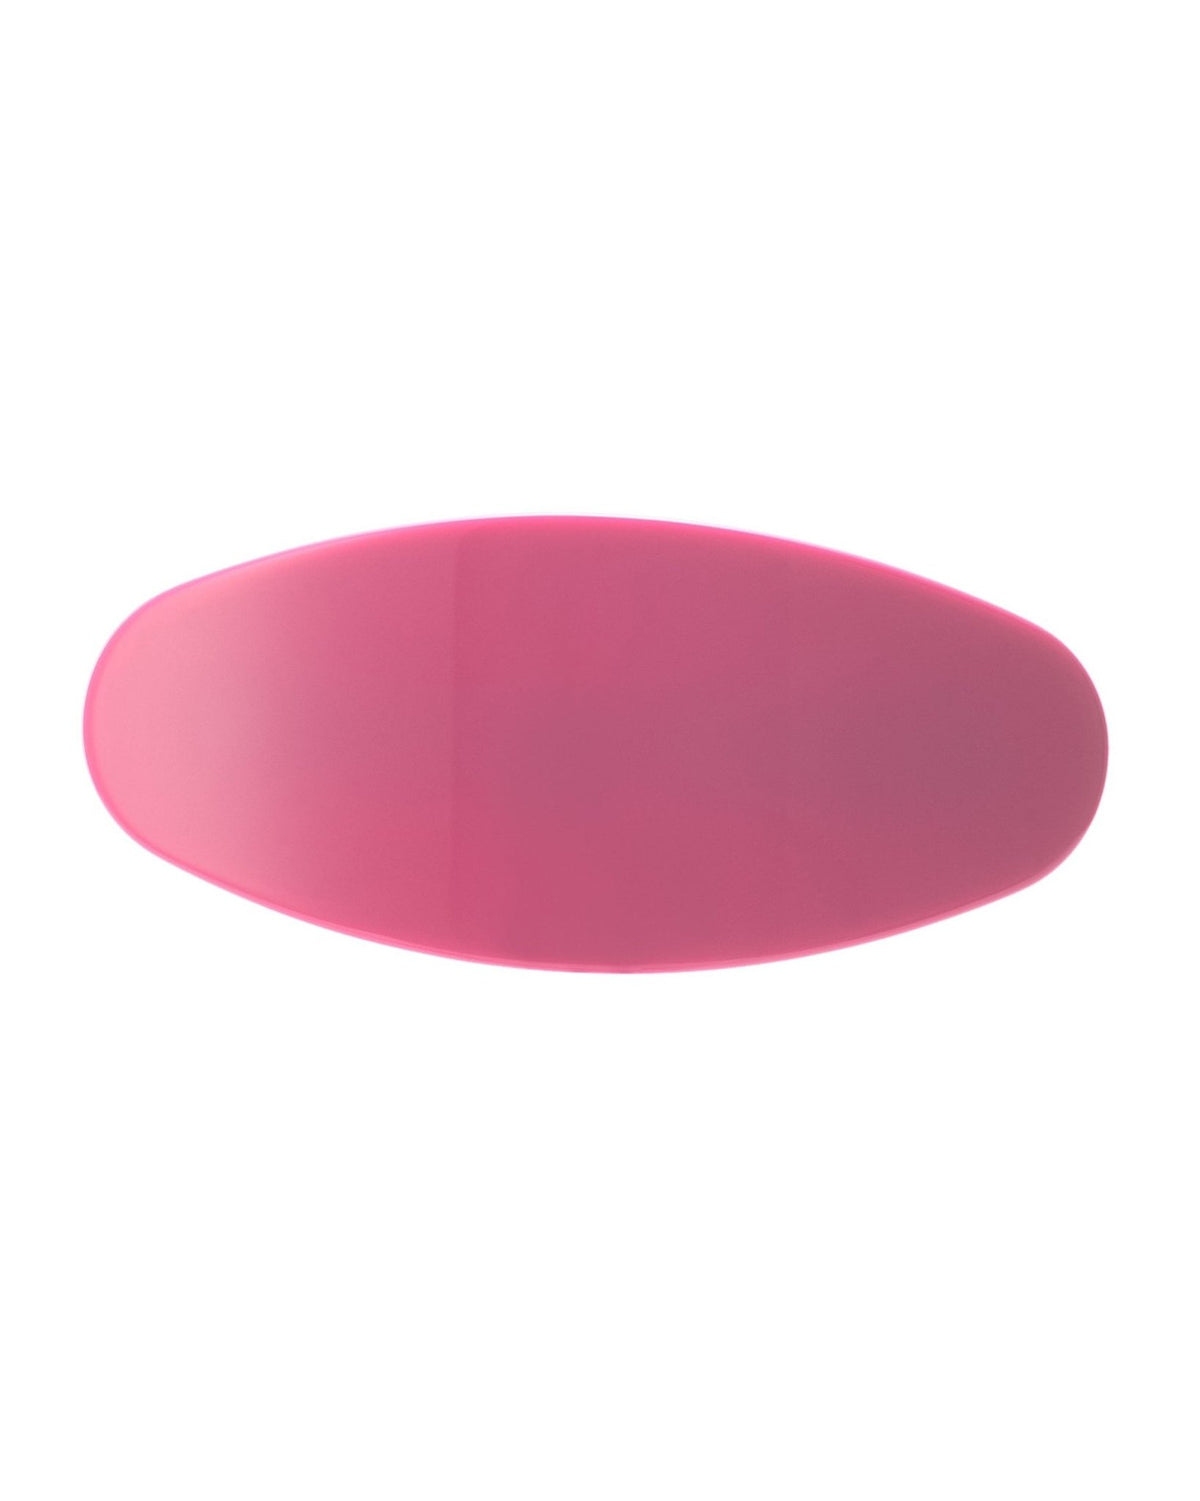 Jumbo Oval Clip in Neon Pink - MACHETE